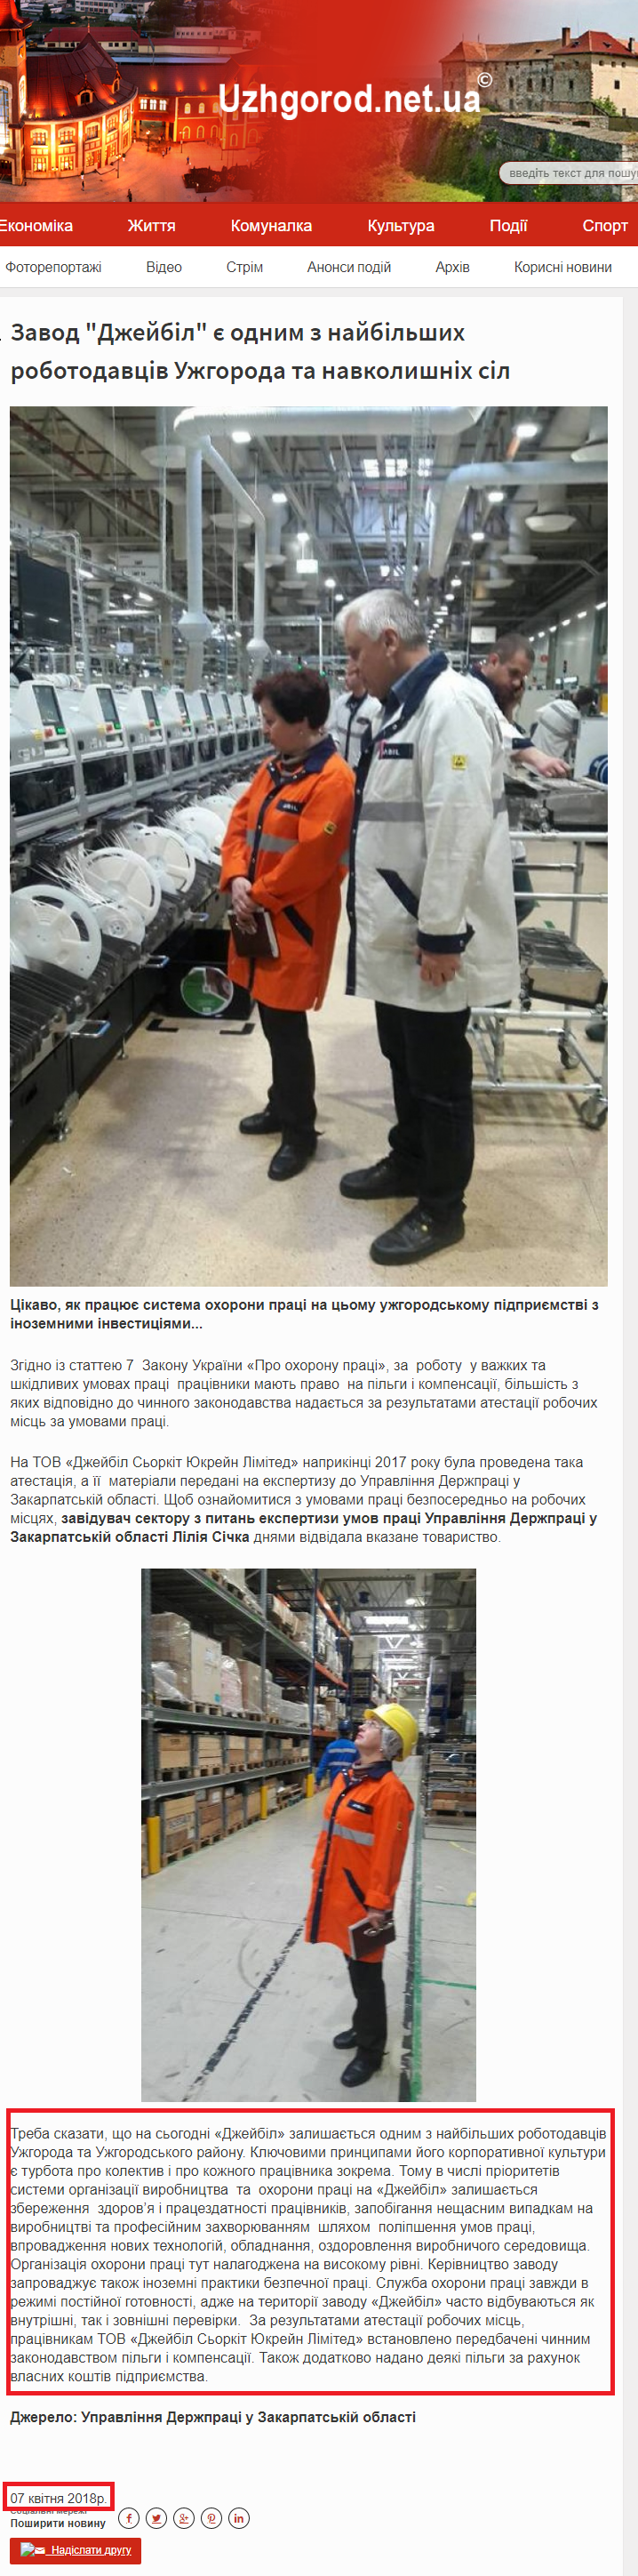 http://uzhgorod.net.ua/news/123651